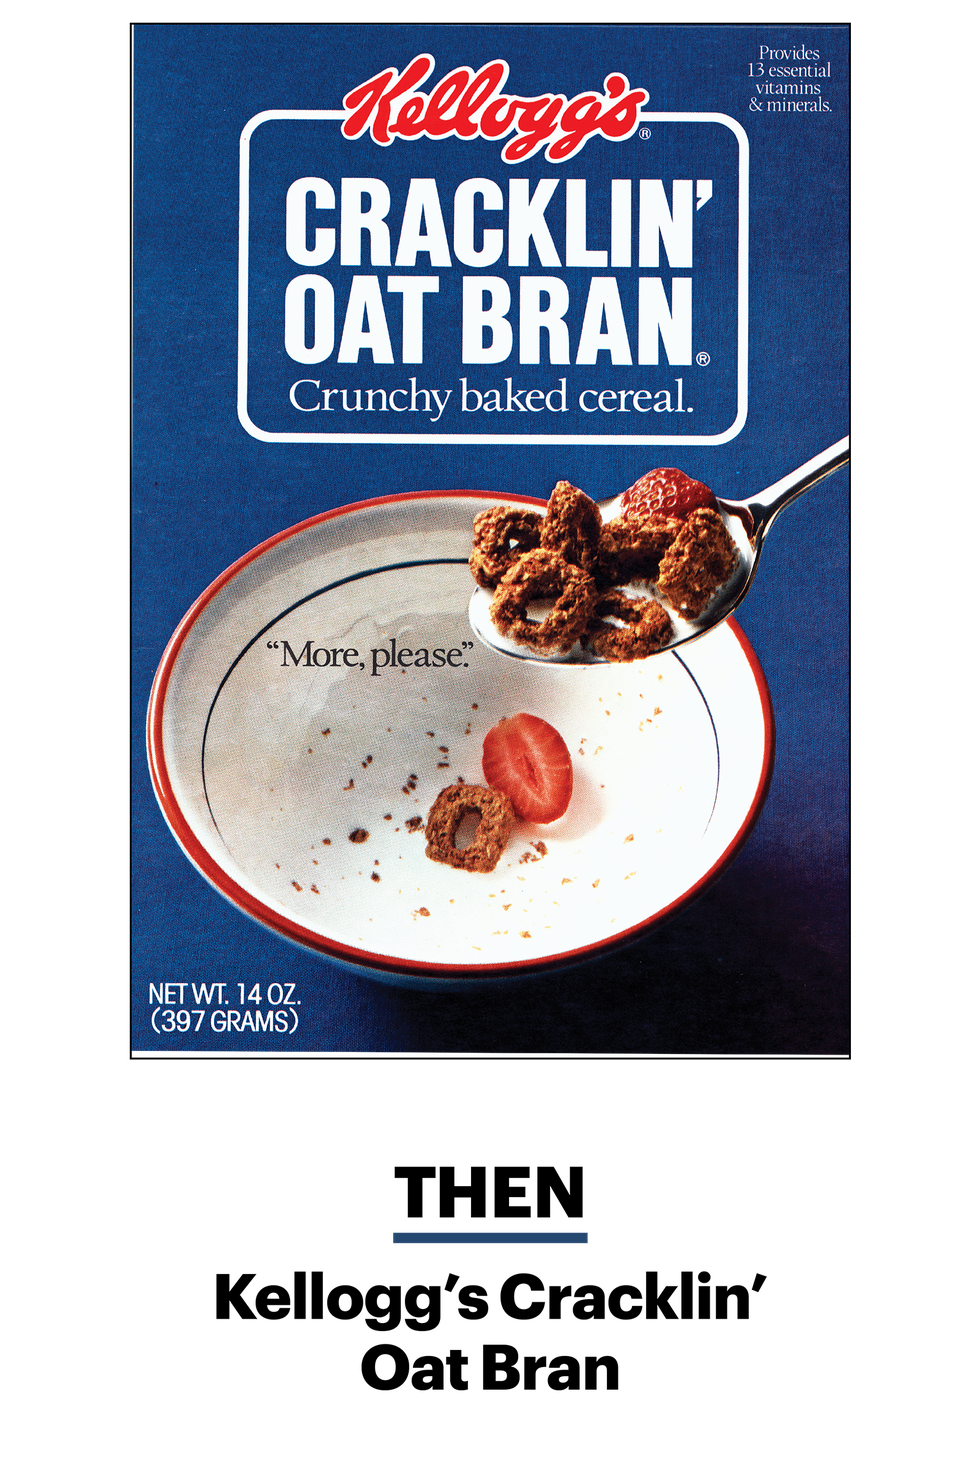 then kelloggs cracklin oat bran